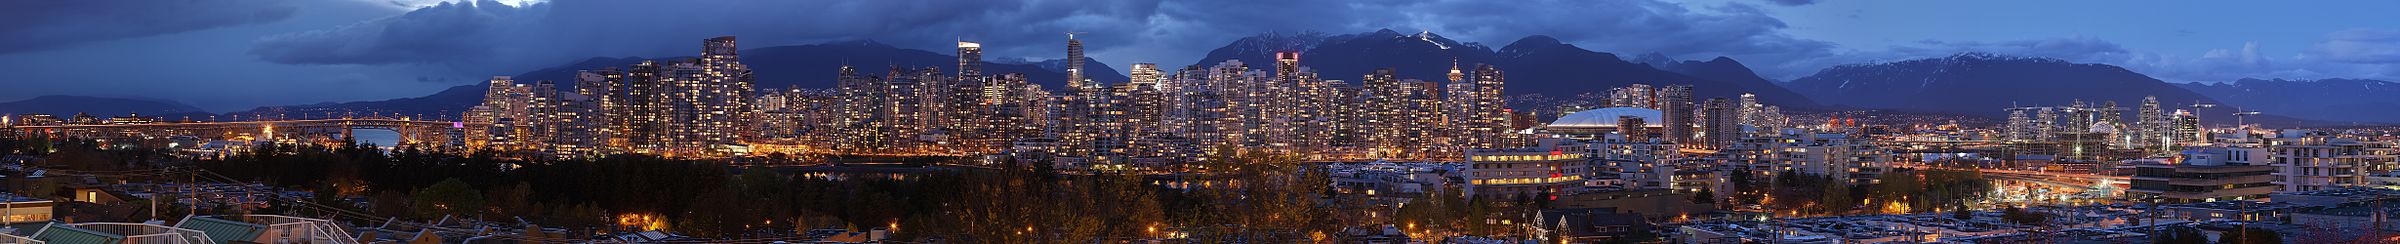 2400px-Vancouver_dusk_pano.jpg